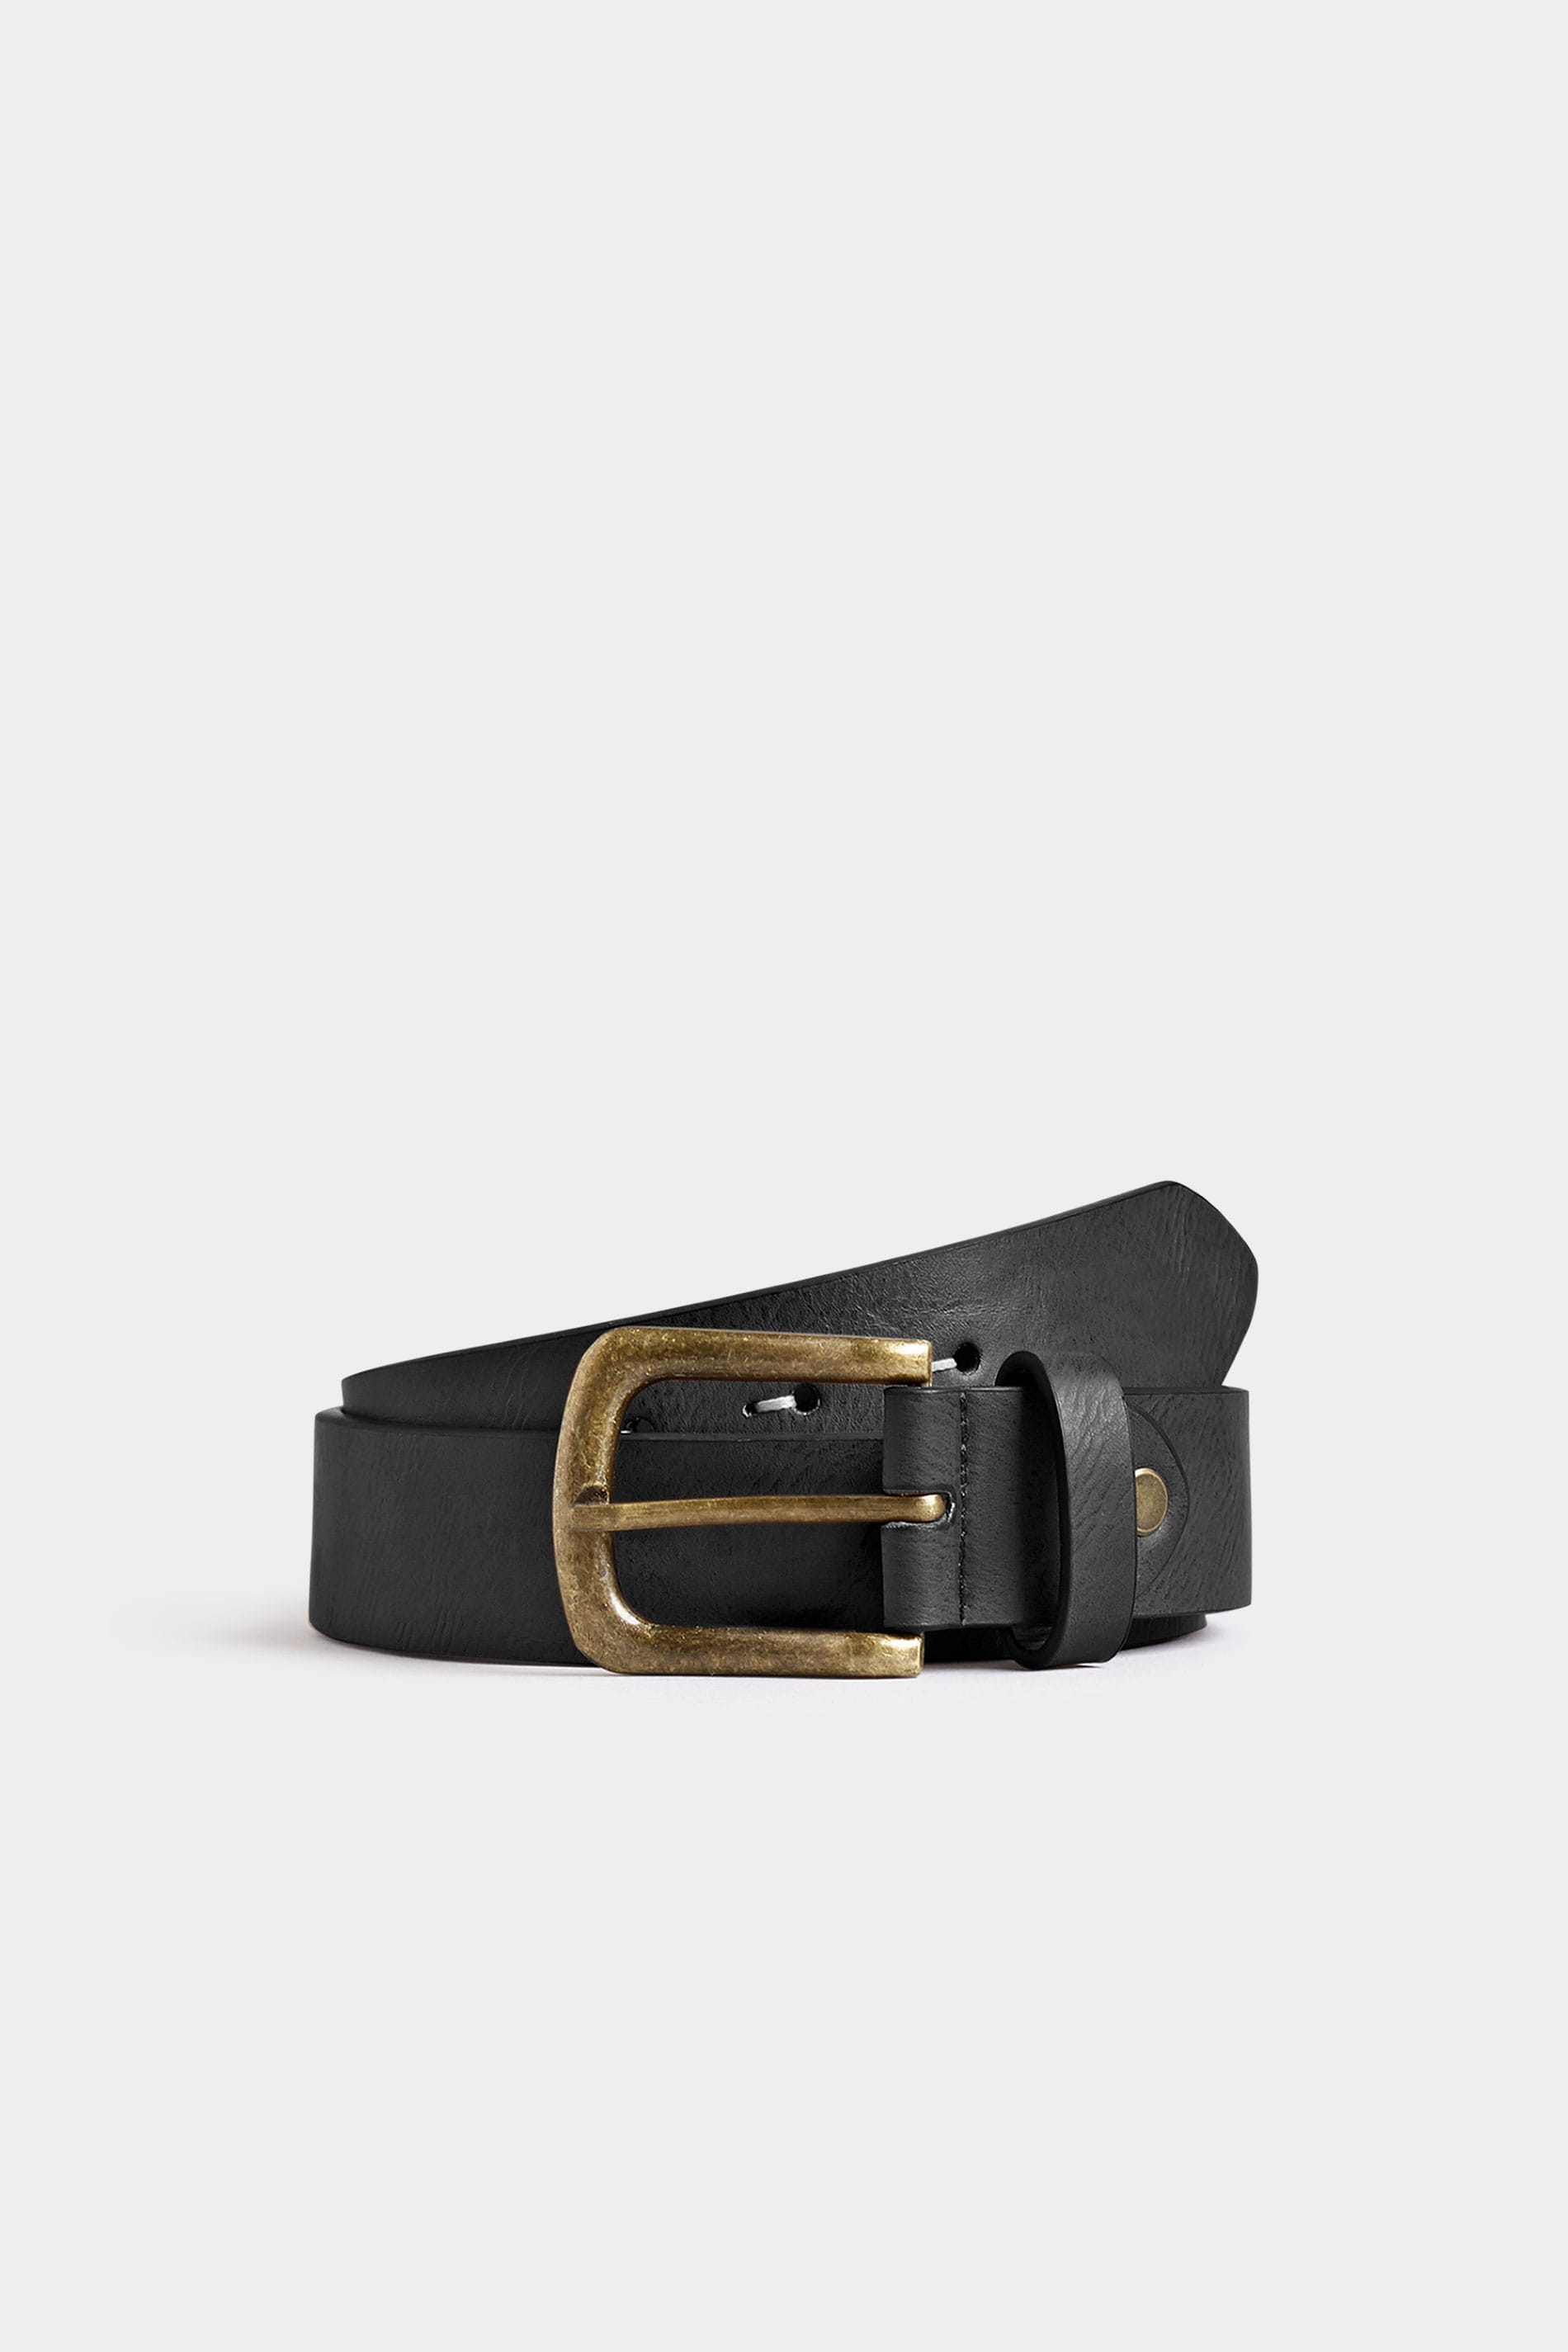 BadRhino Black Bonded Leather Belt_0f48.jpg